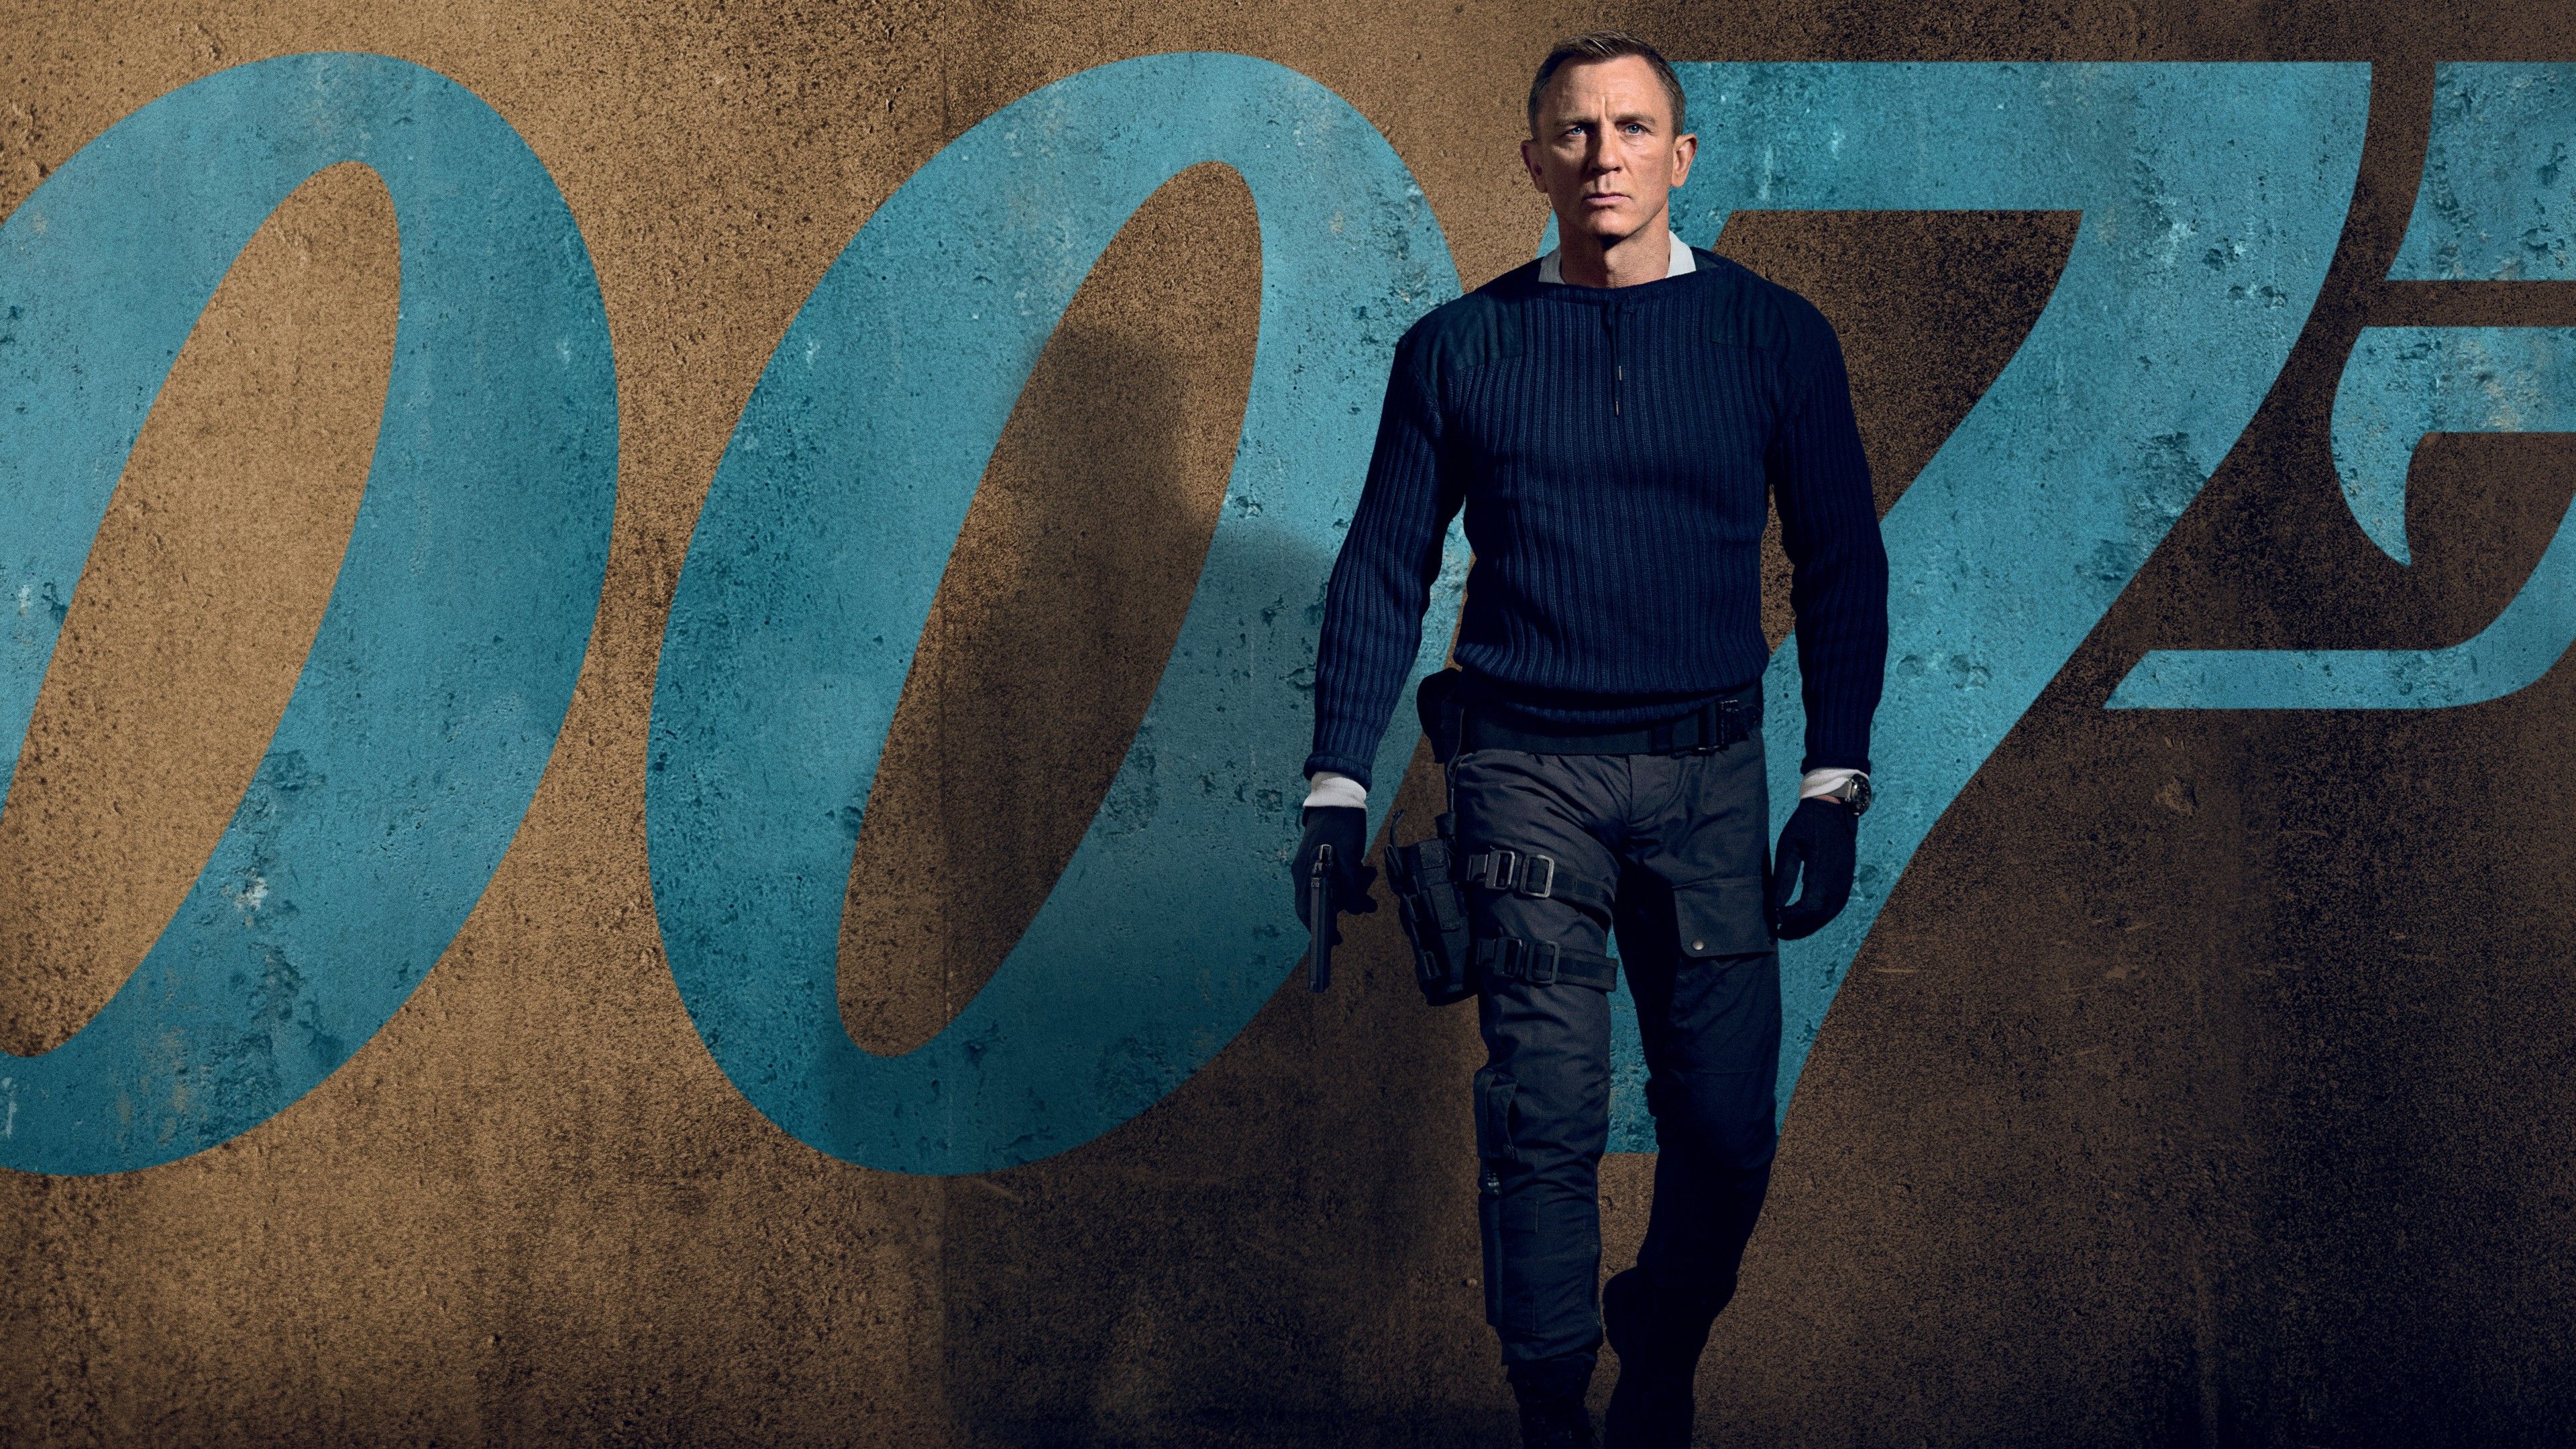 No Time to Die 4K Wallpaper, Daniel Craig, James Bond, 2020 Movies, 5K, 8K, Movies